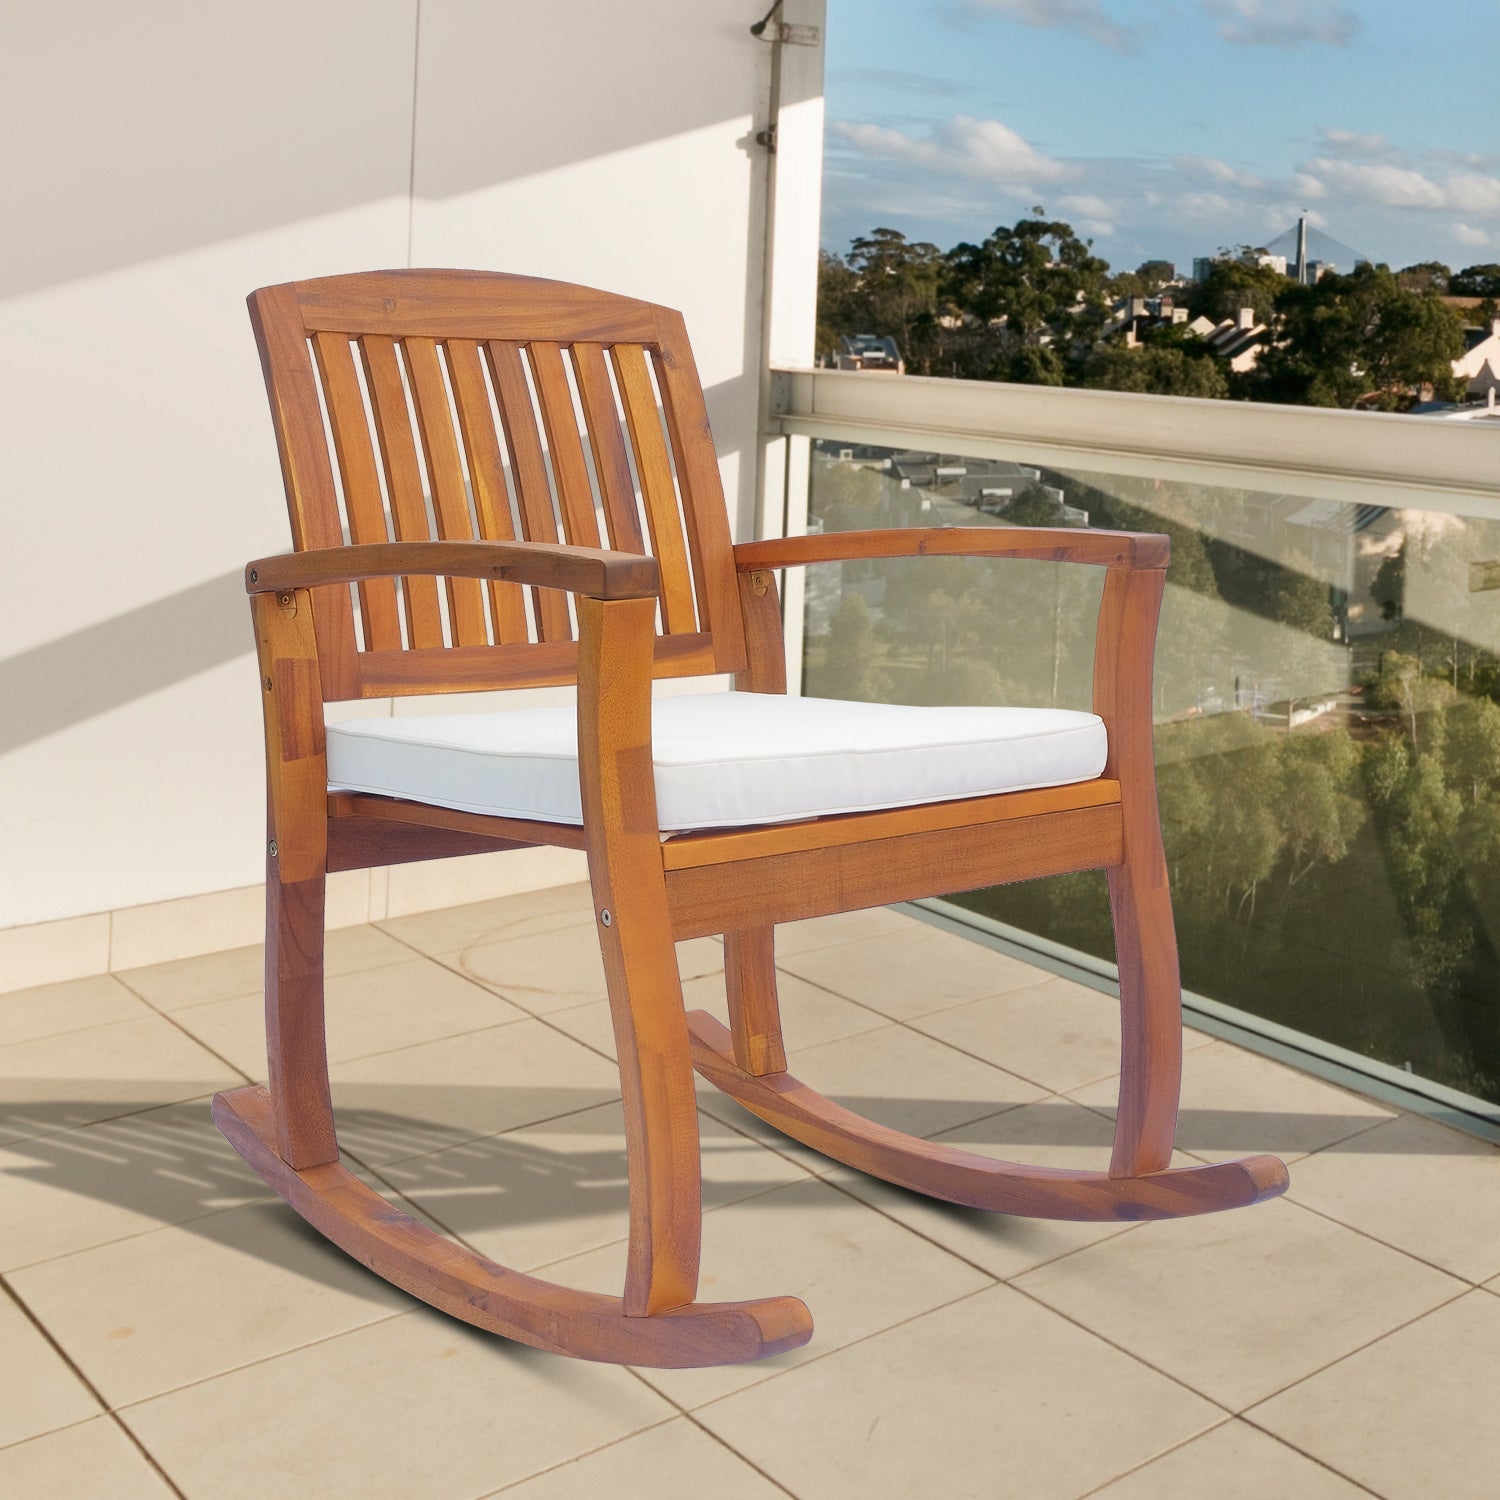 Garden Acacia Wood Rocking Chair Deck Indoor Outdoor Porch Seat Rocker with Cushion-1